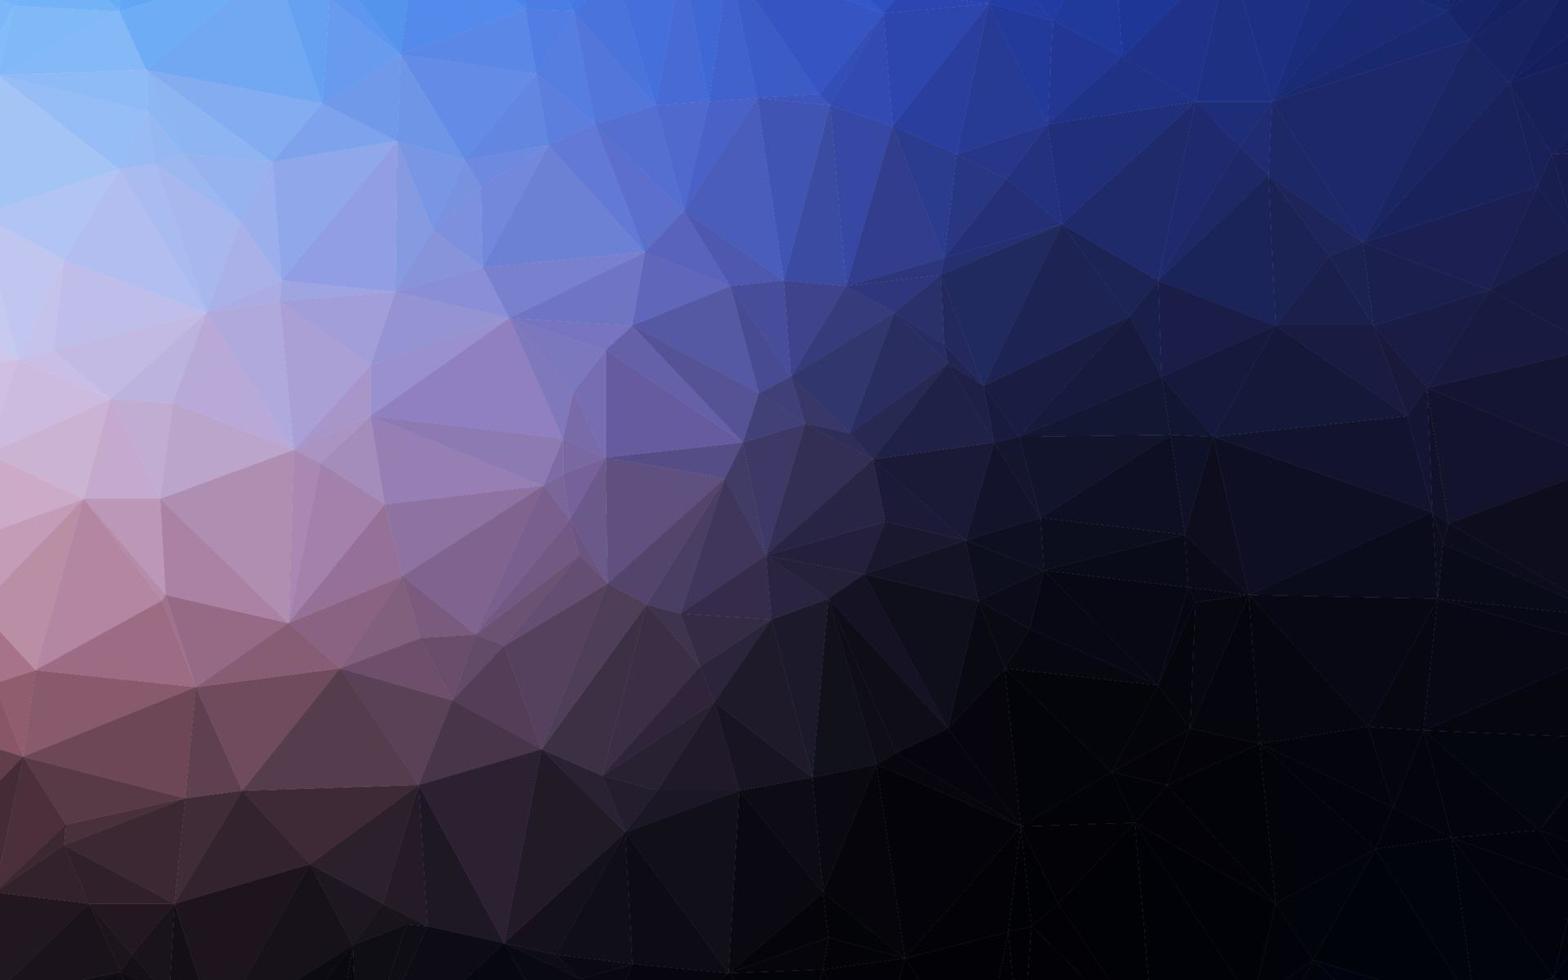 cubierta poligonal abstracta de vector azul y rosa oscuro.